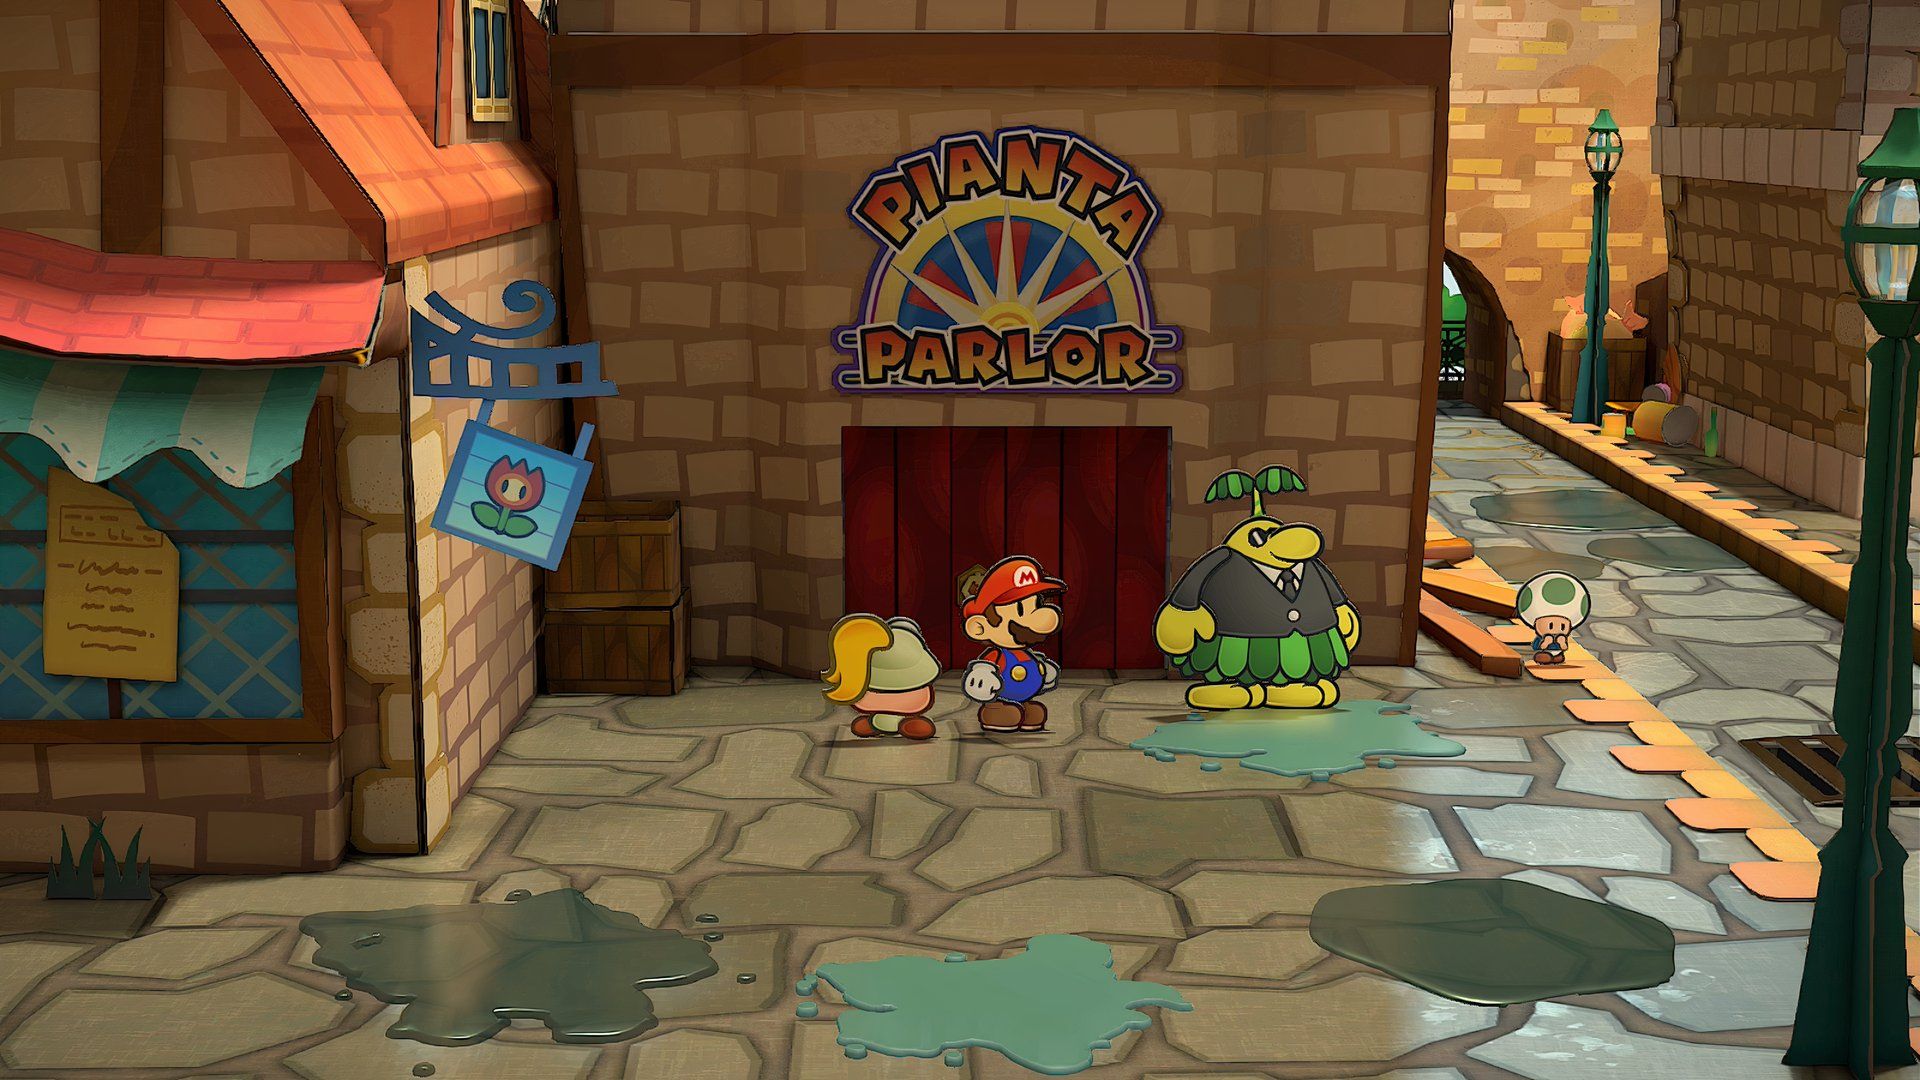 Paper Mario: The Thousand-Year Door - Mario outside of Pianta Parlor